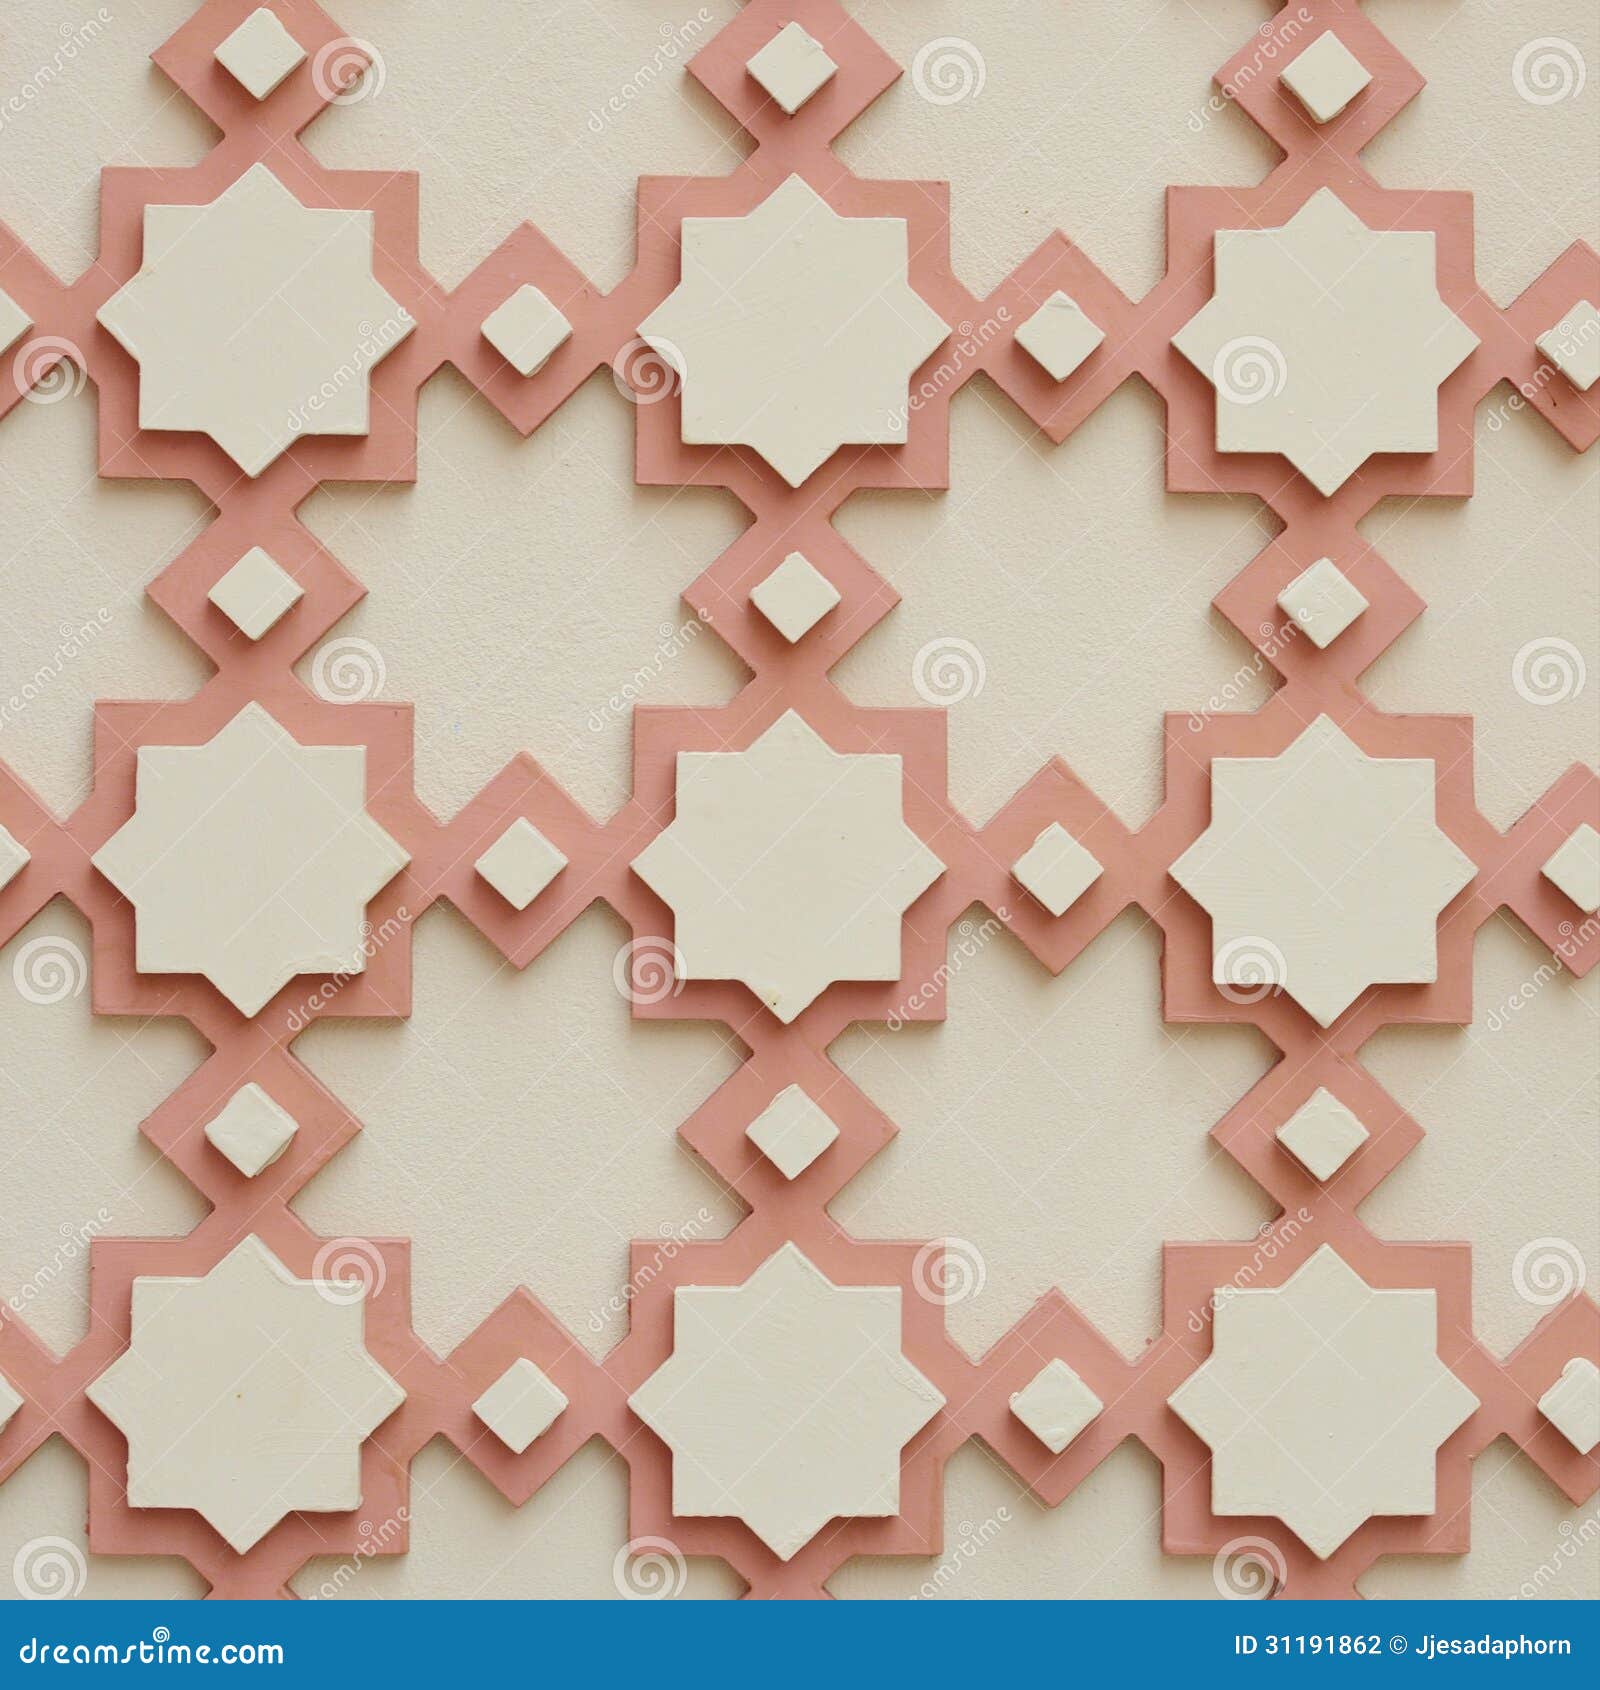 morroco traditional tile texture